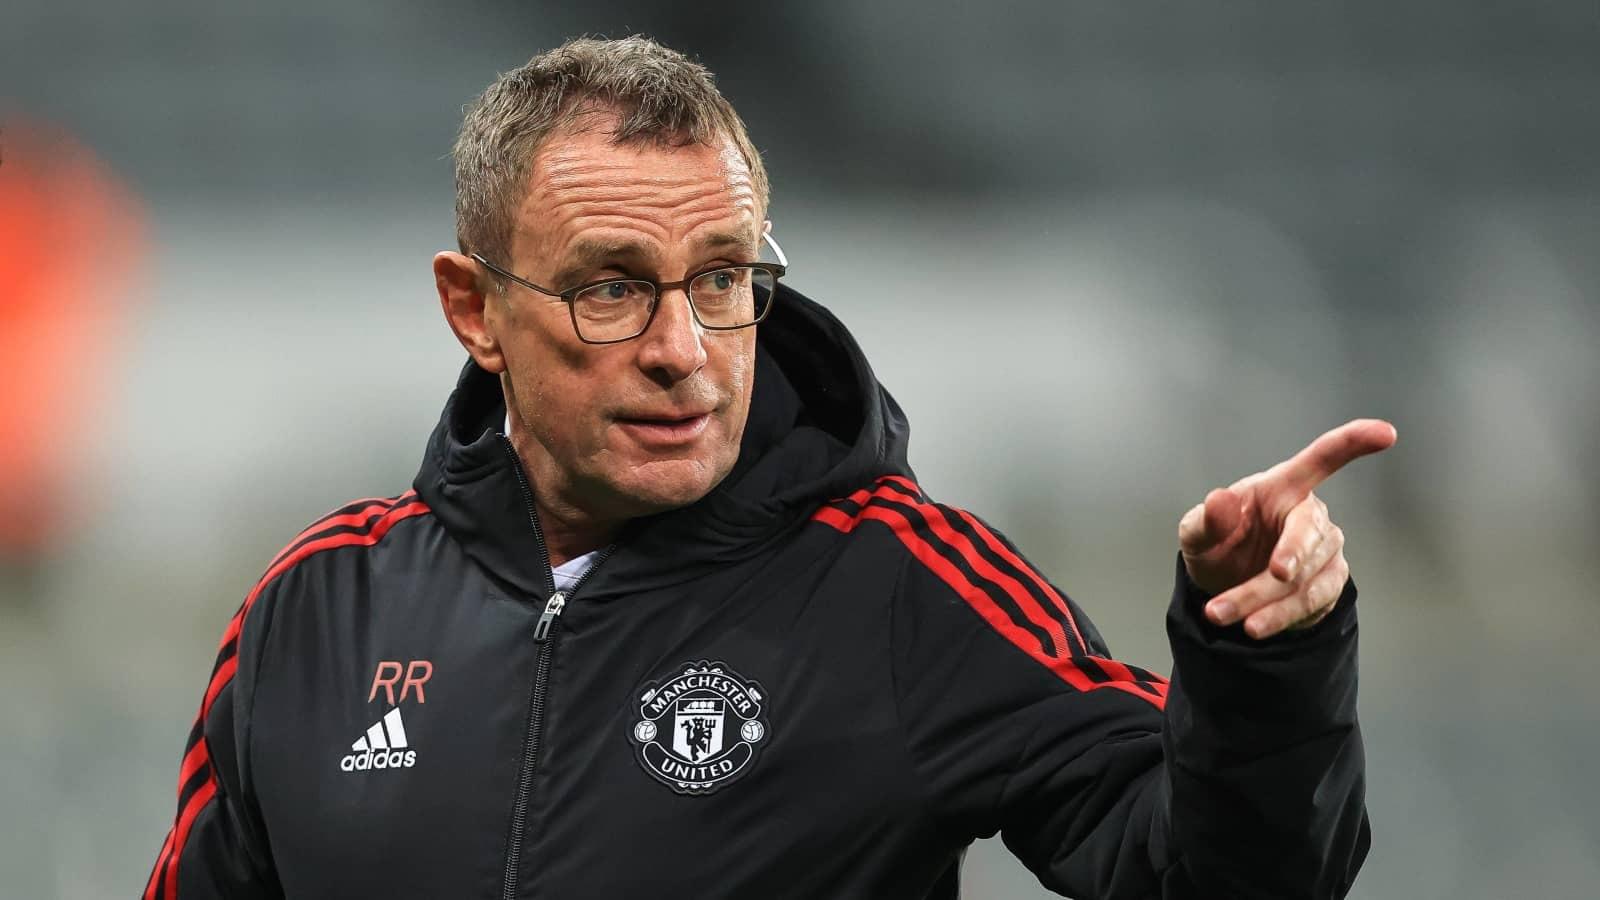 Ralf Ranfnick is coaching Manchester United